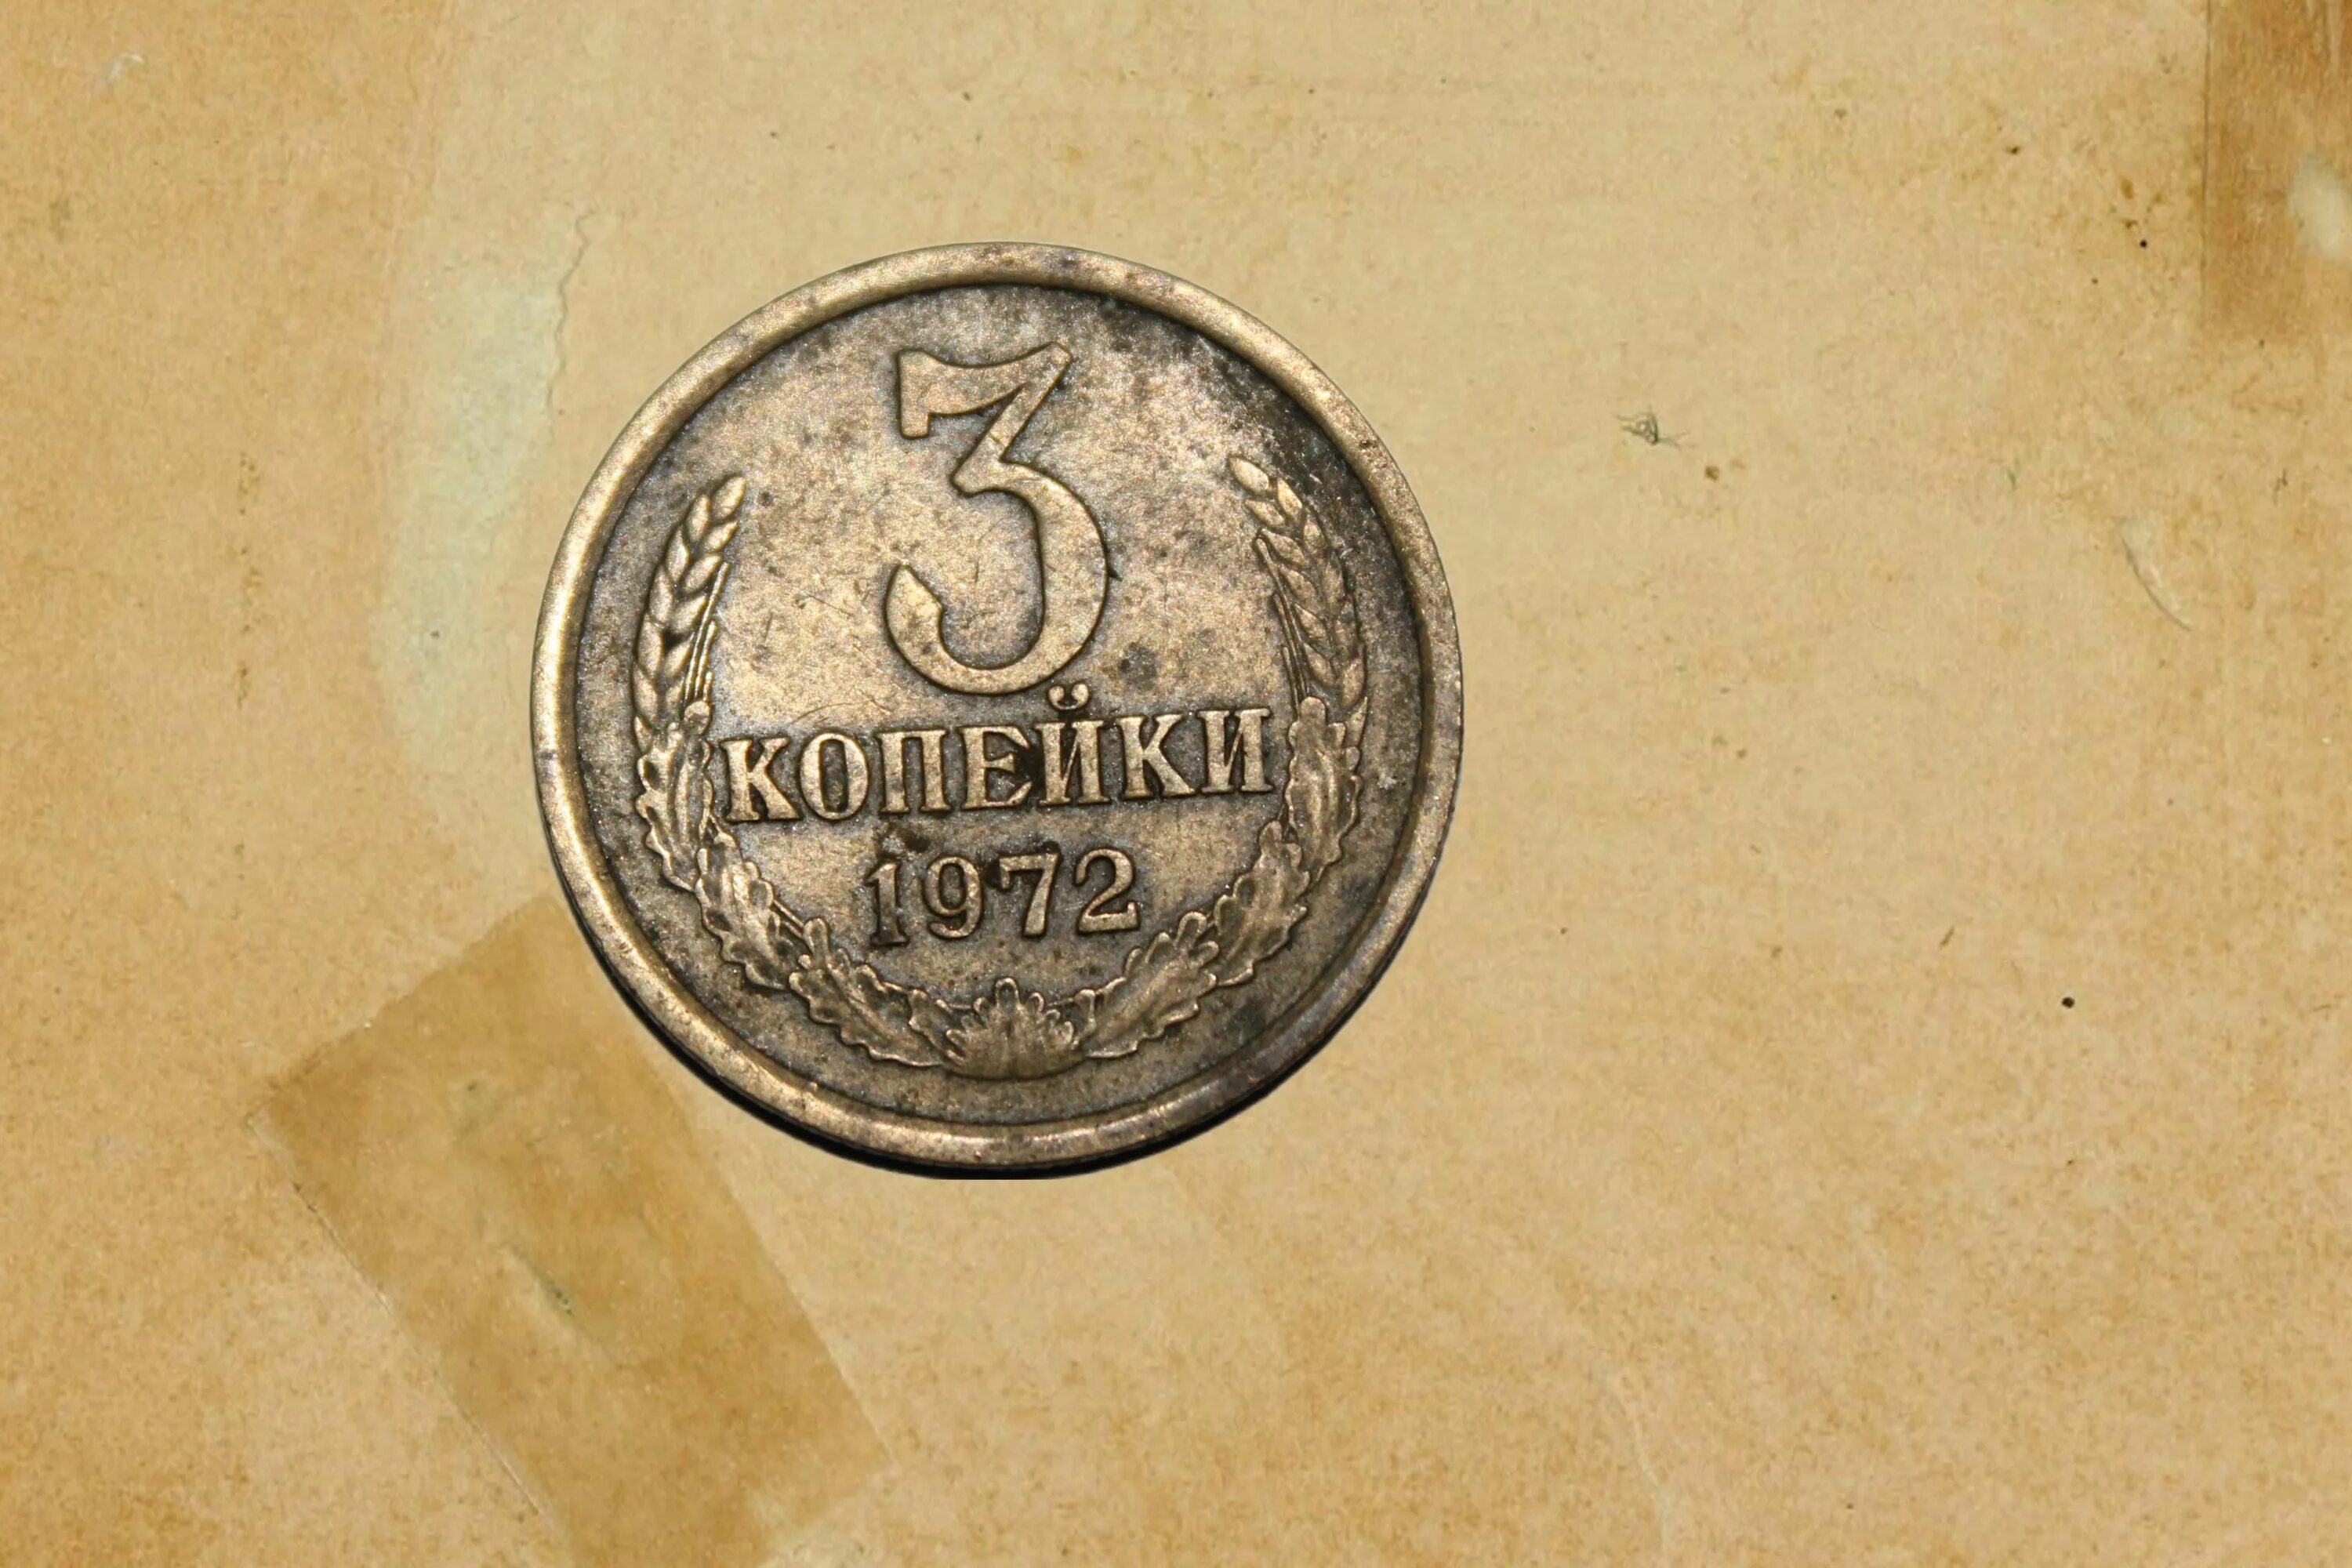 3 Копейки 1972. Монета 2 копейки 1972 год. 3 Коп 1970 года. Советские три копейки. 1 гривна стоит 3 рубля 70 копеек